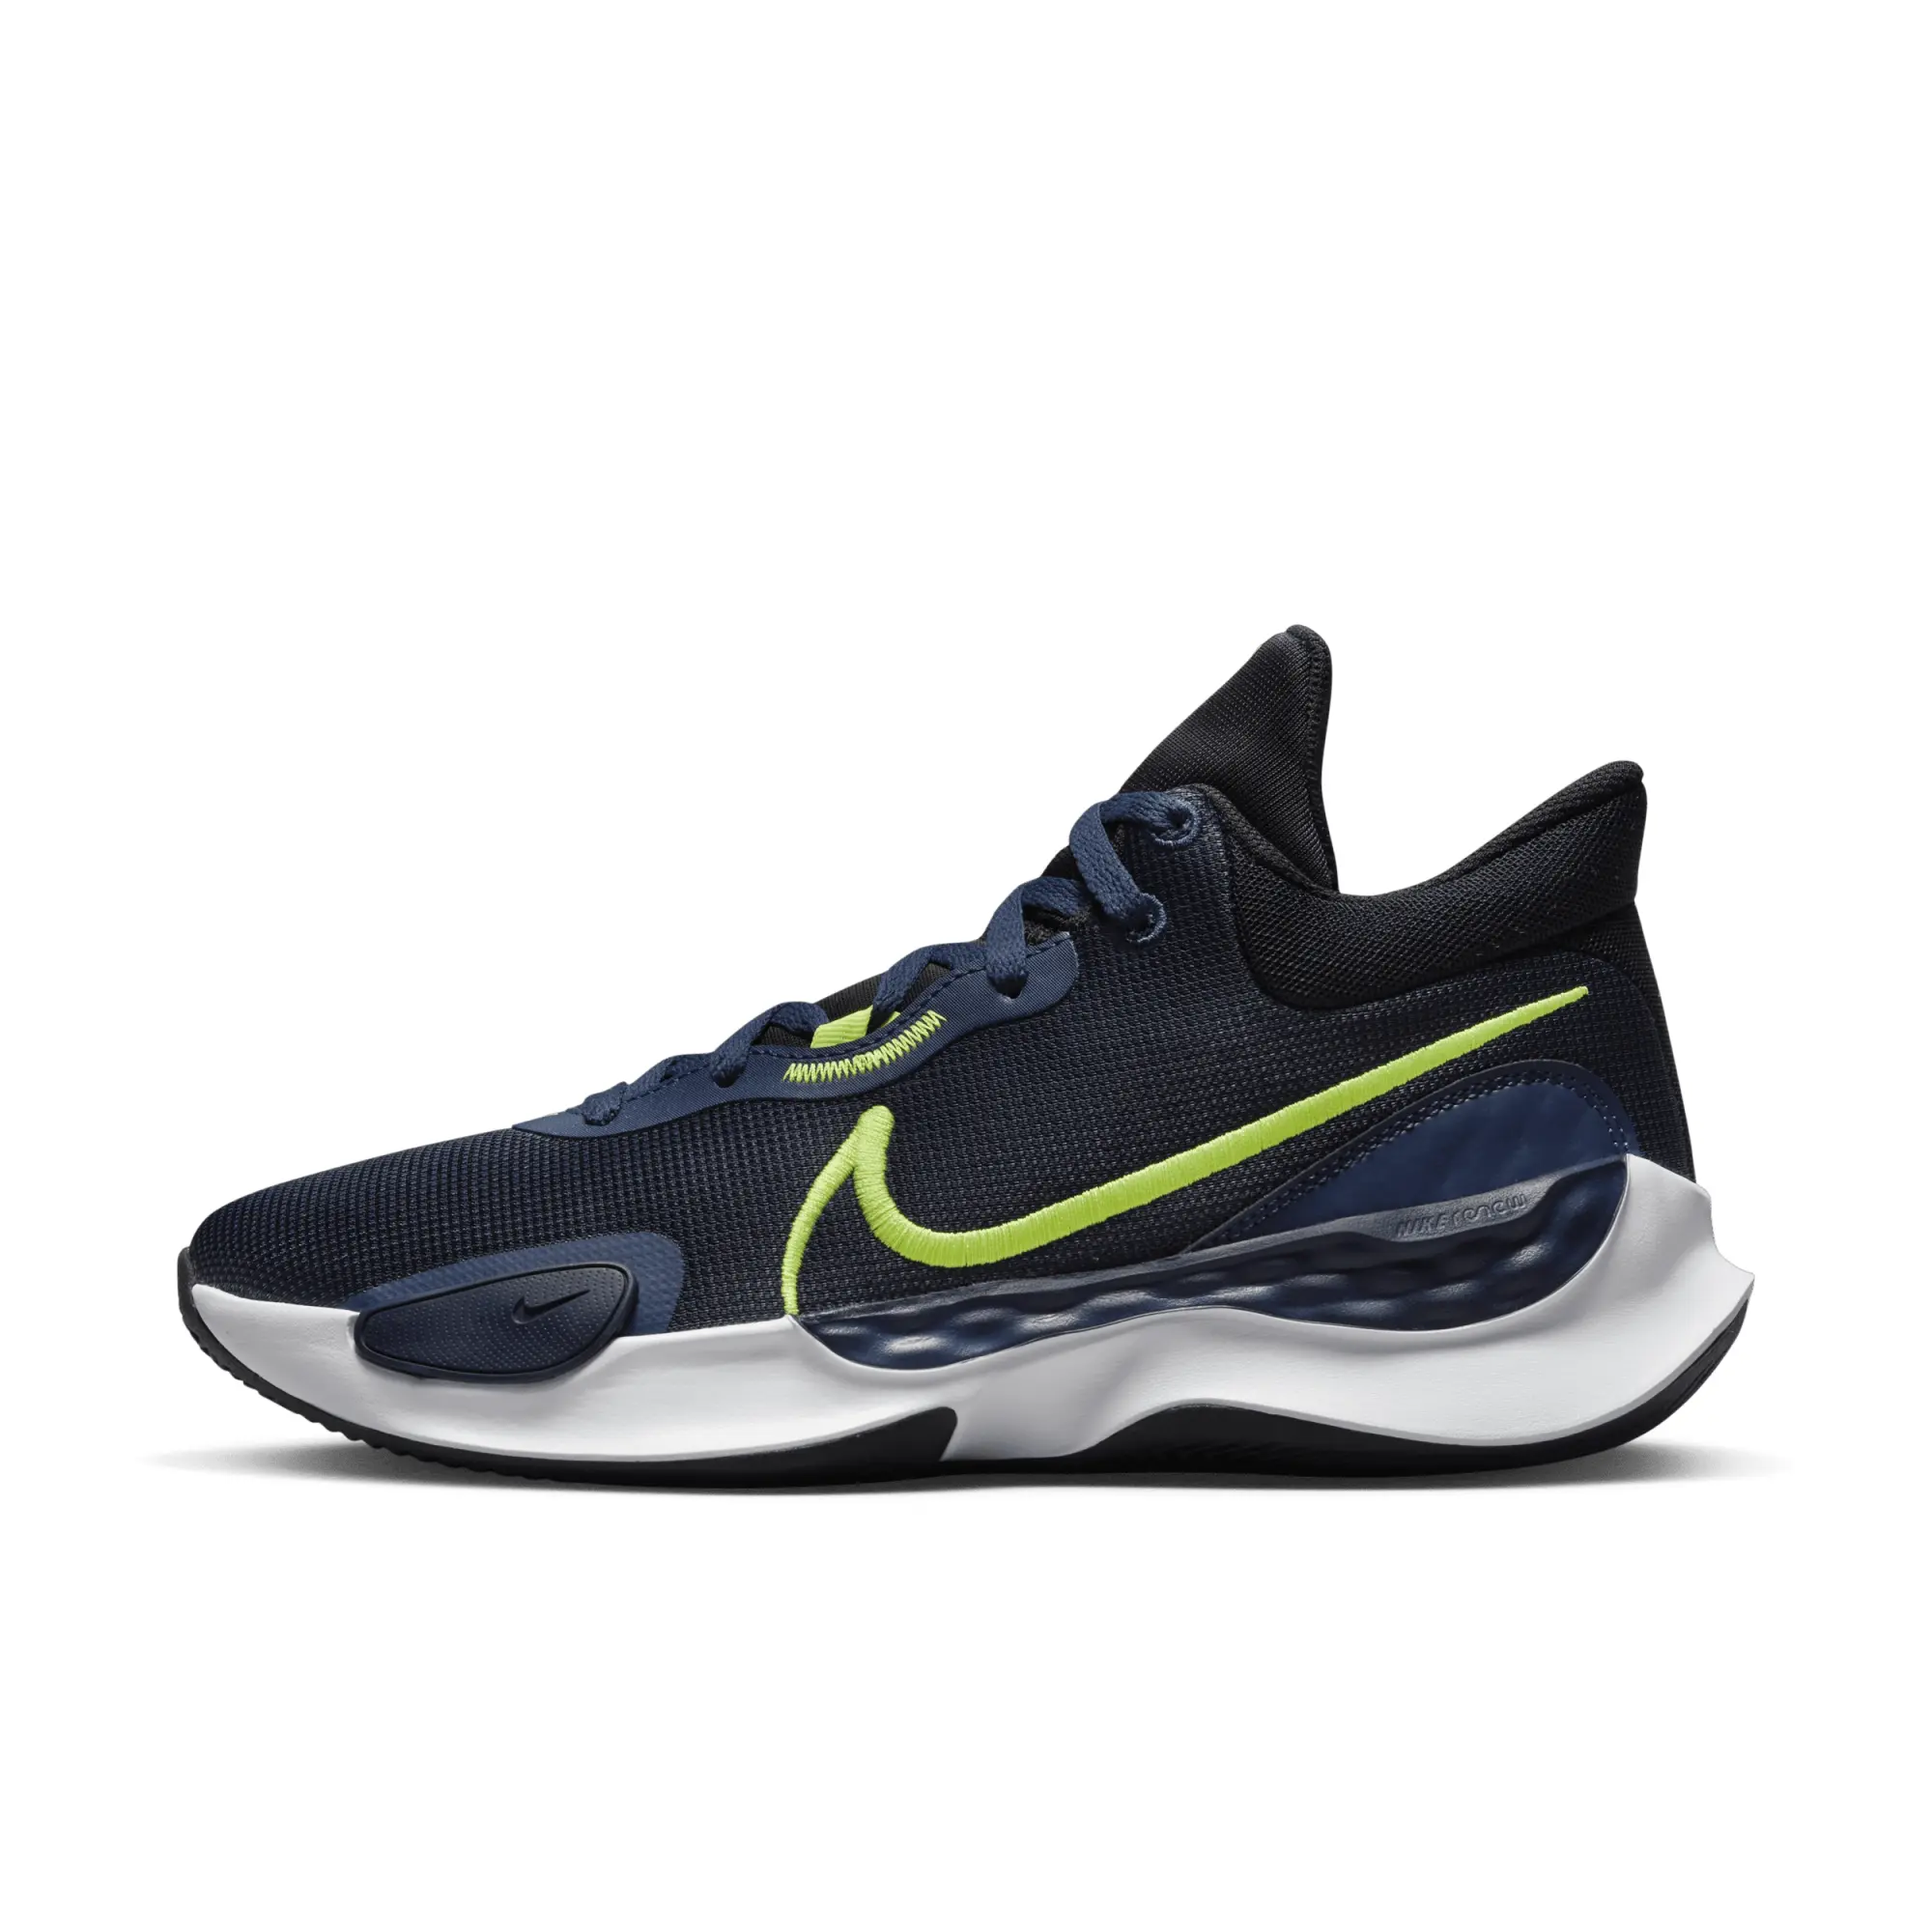 Nike Renew Elevate 3 Basketball Shoes - Black